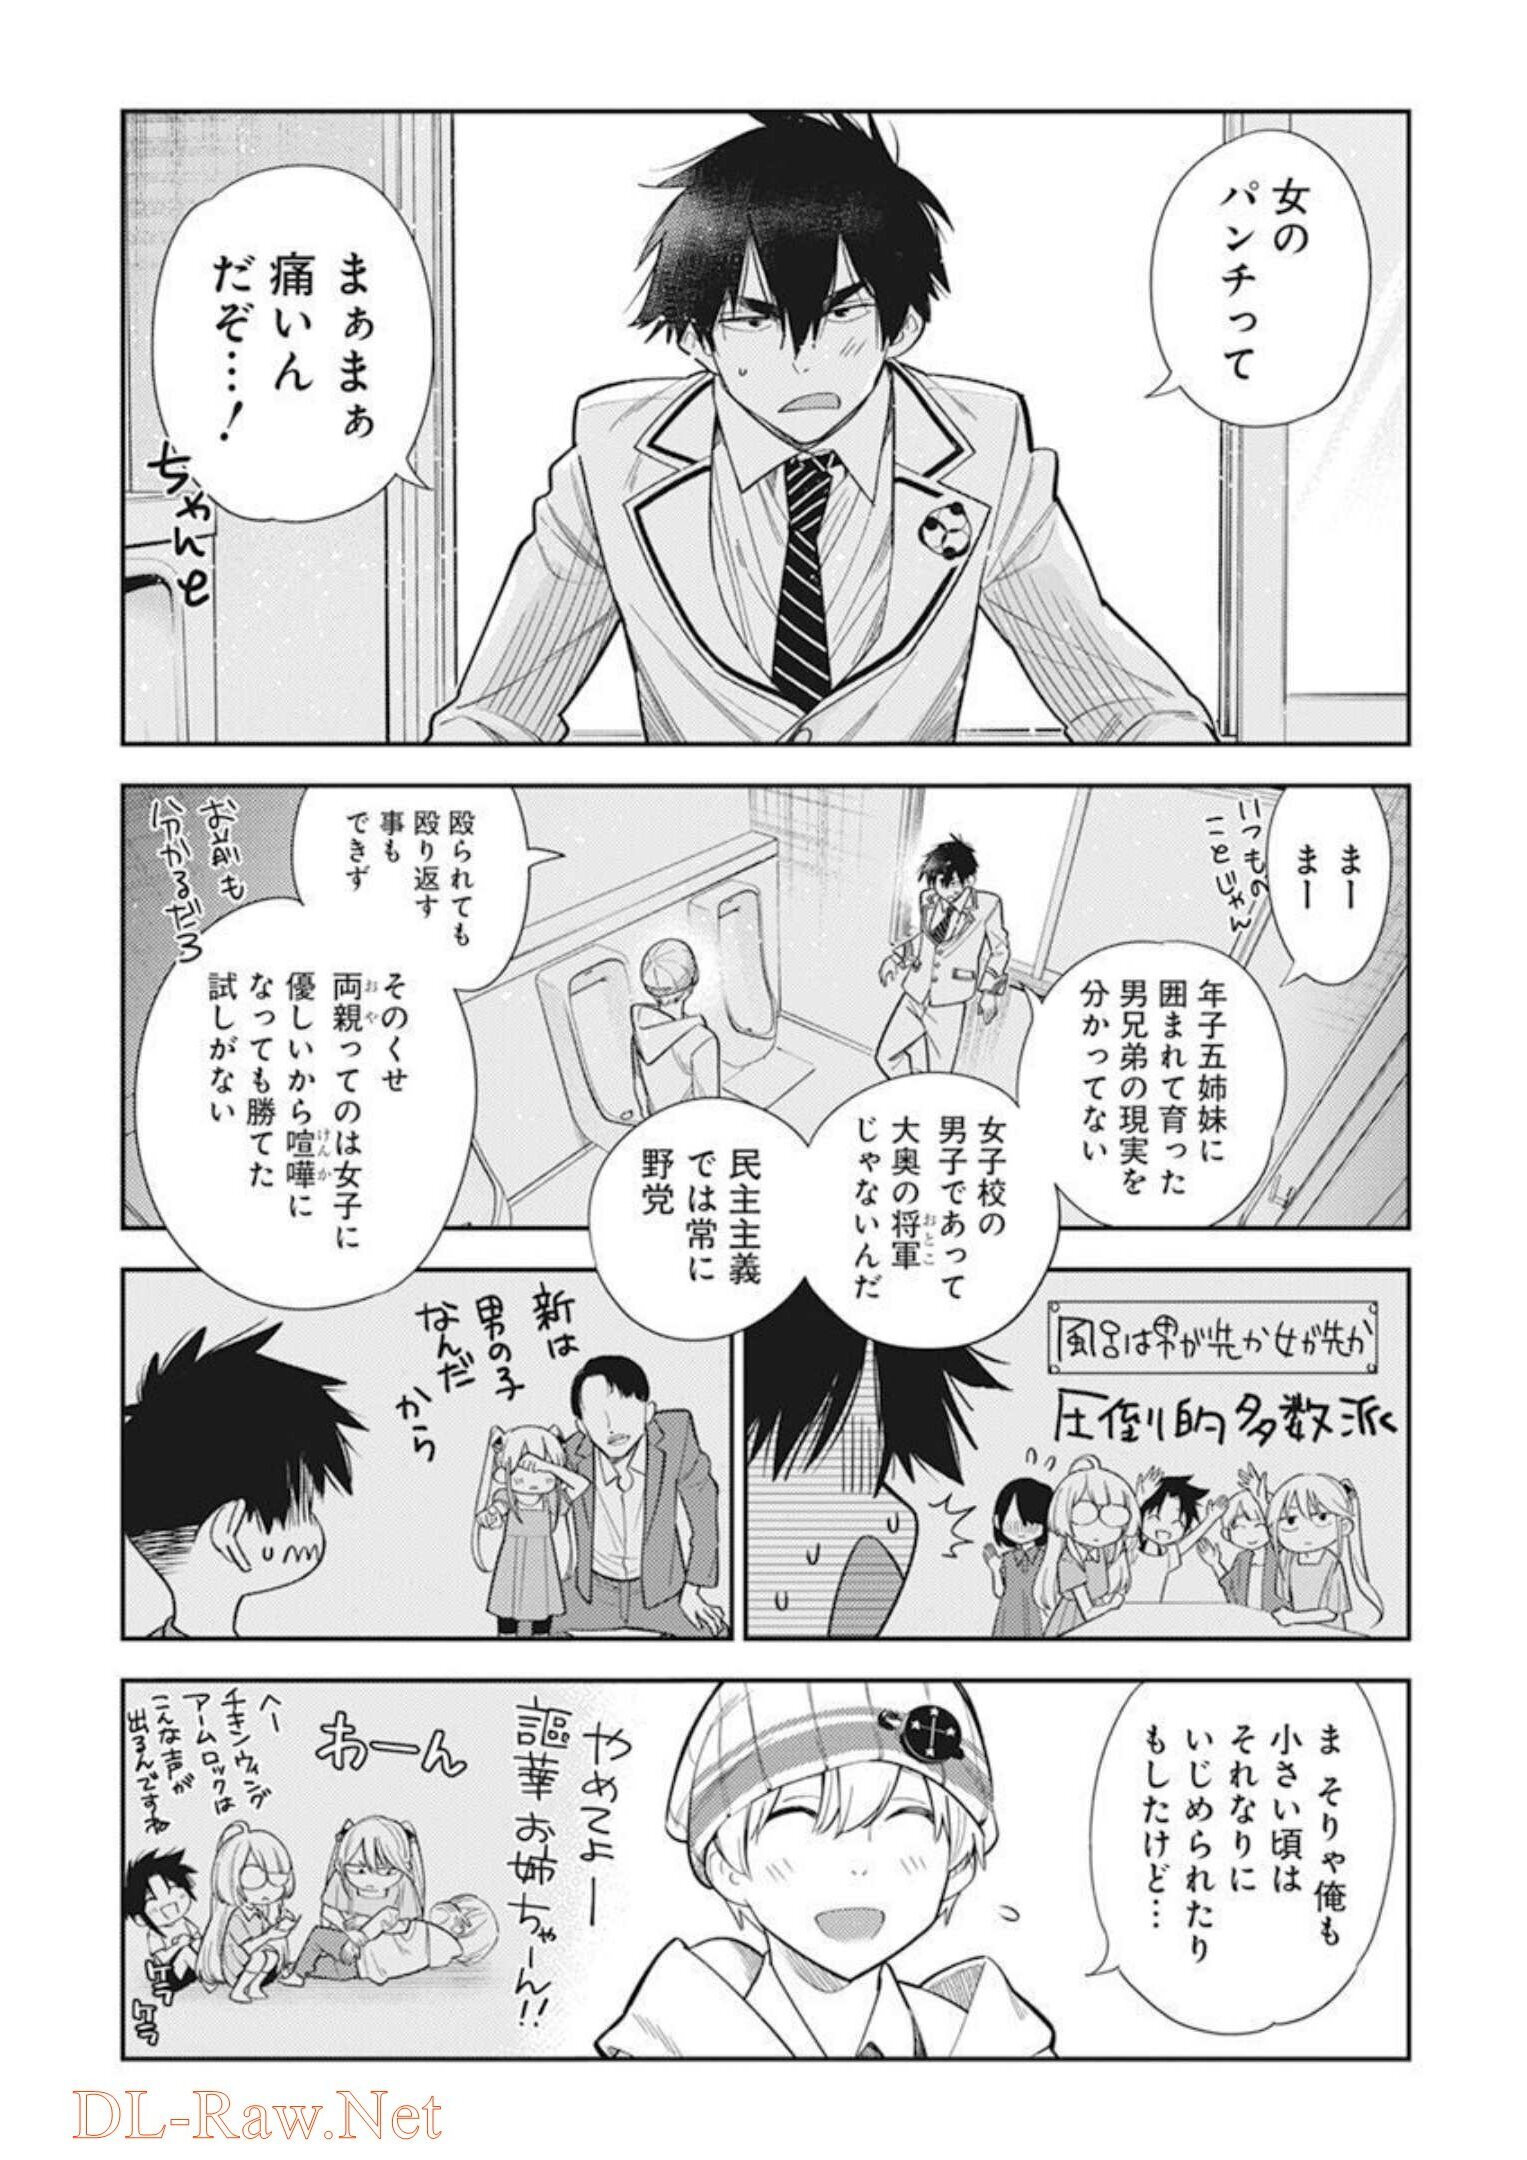 Shiunji-ke no Kodomotachi (Children of the Shiunji Family) - Chapter 01 - Page 20